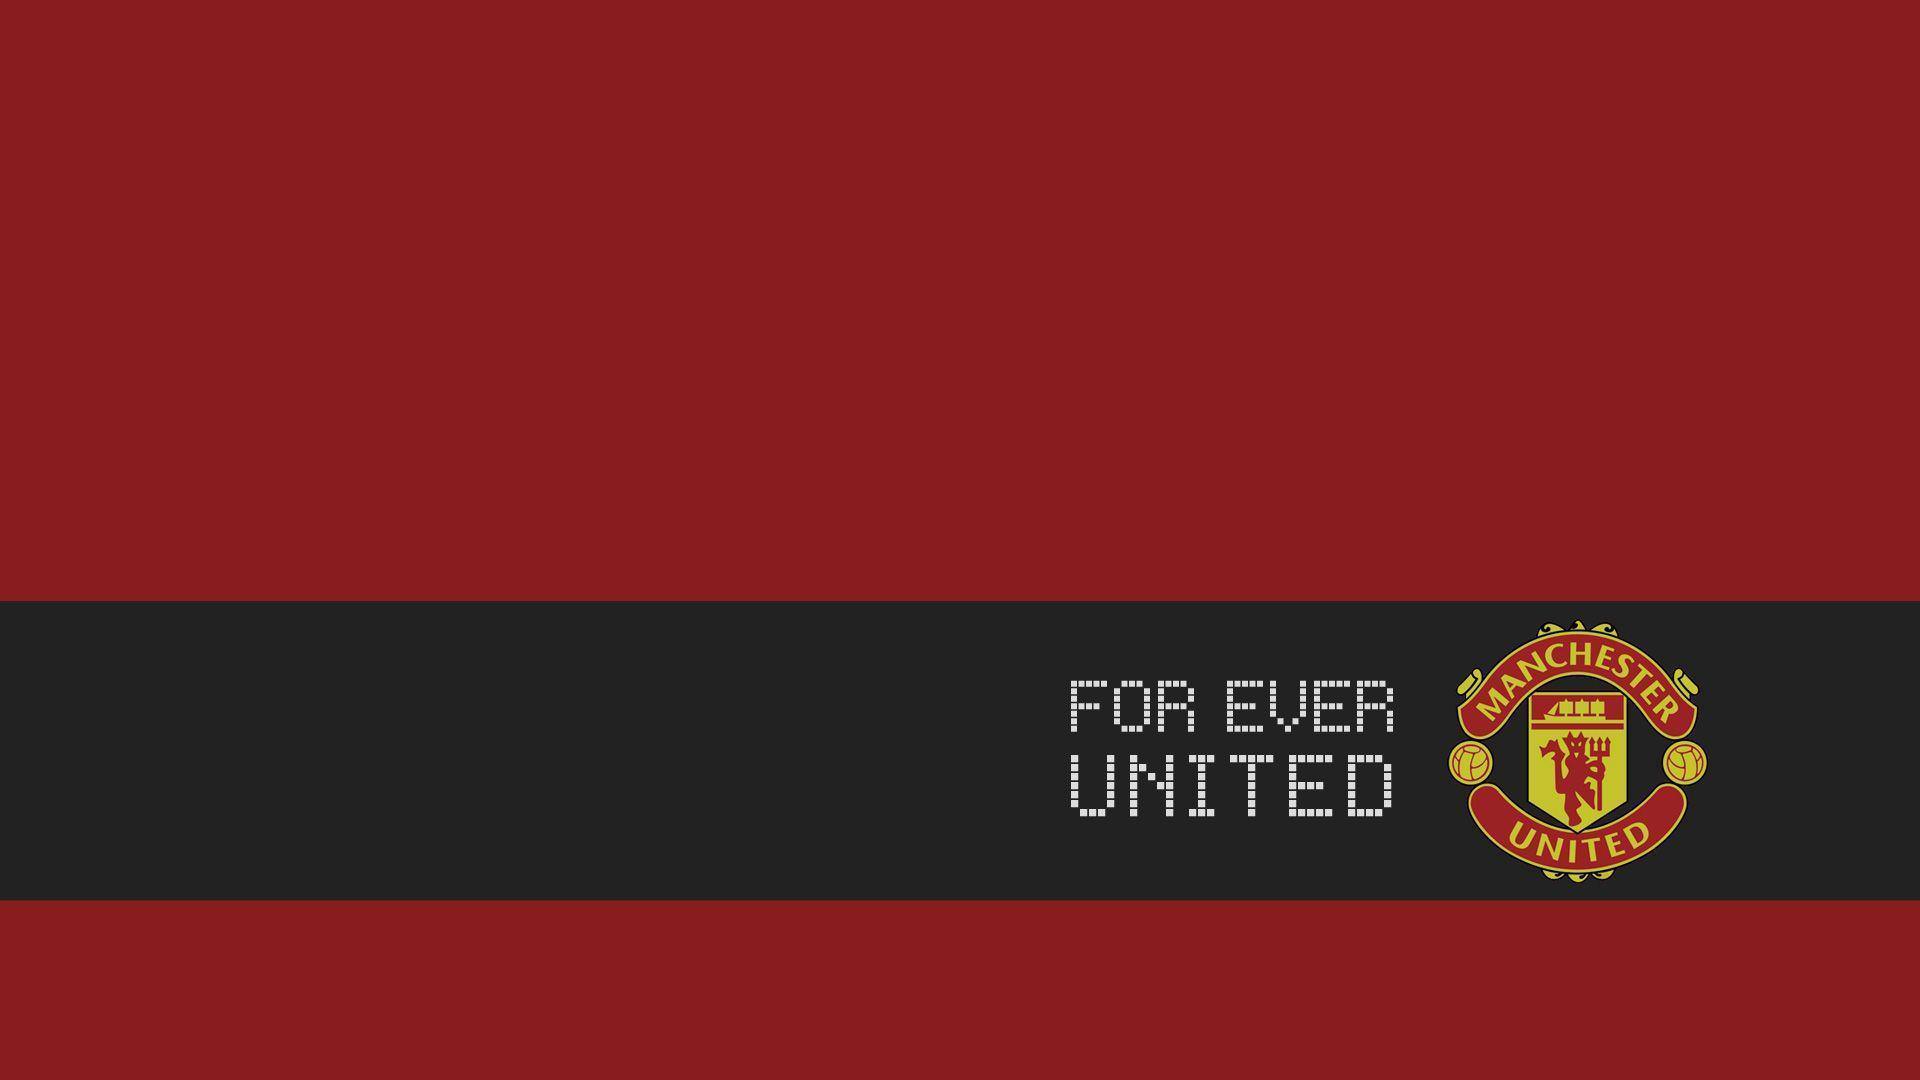 Download Manchester United Ultra HD Wallpaper In 4K 5K 2020 Wallpaper -  